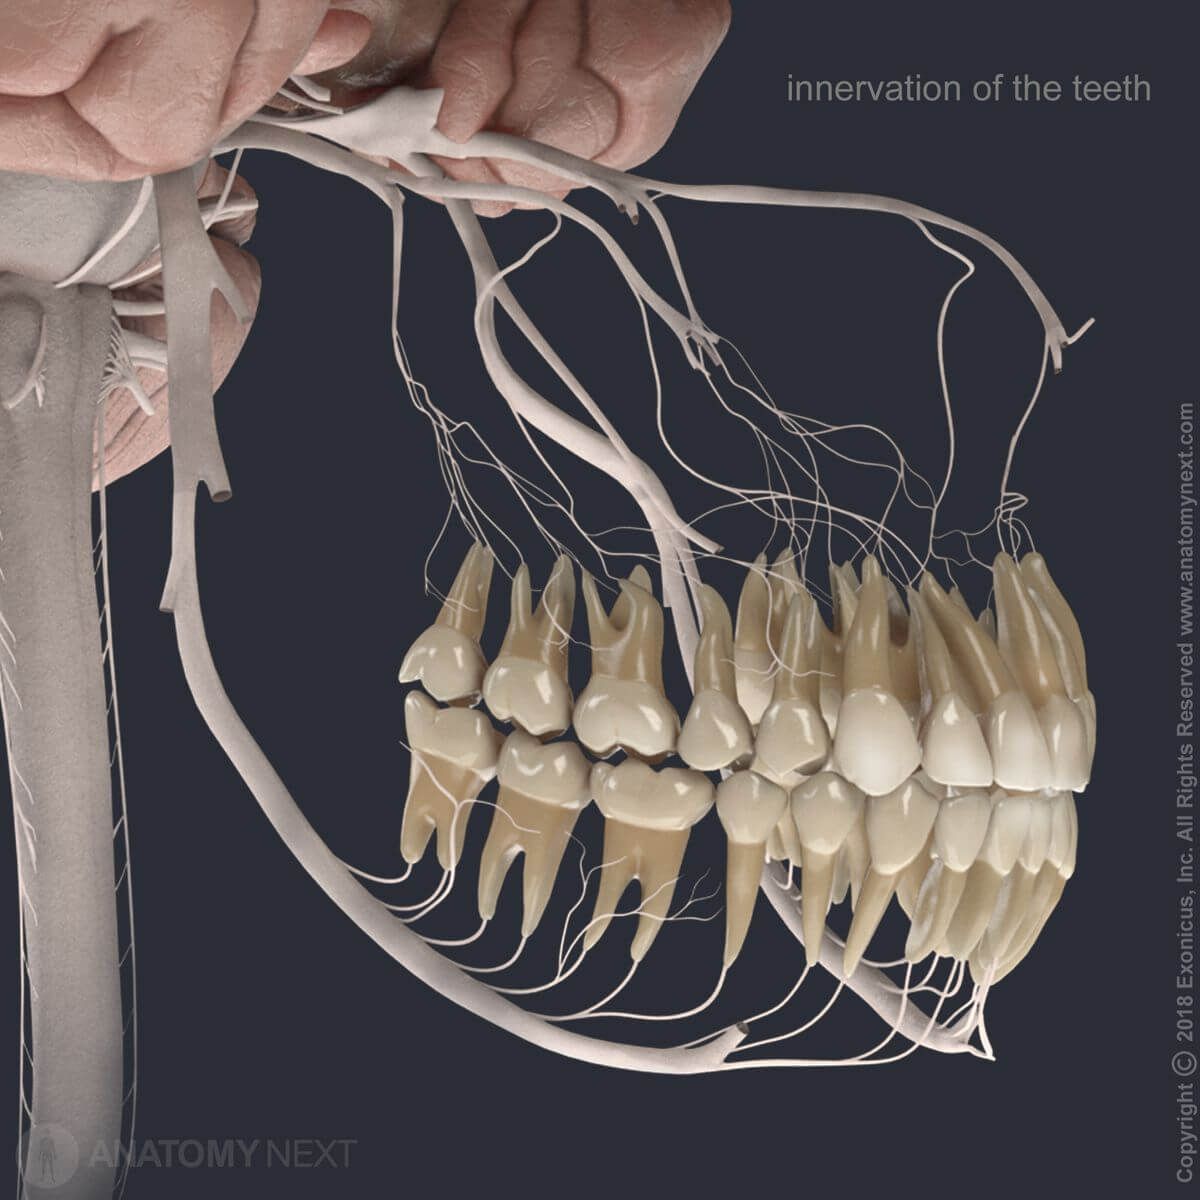 Mandibular nerve, third division of trigeminal nerve, CN V3, branches of mandibular nerve, maxillary nerve, innervation of teeth